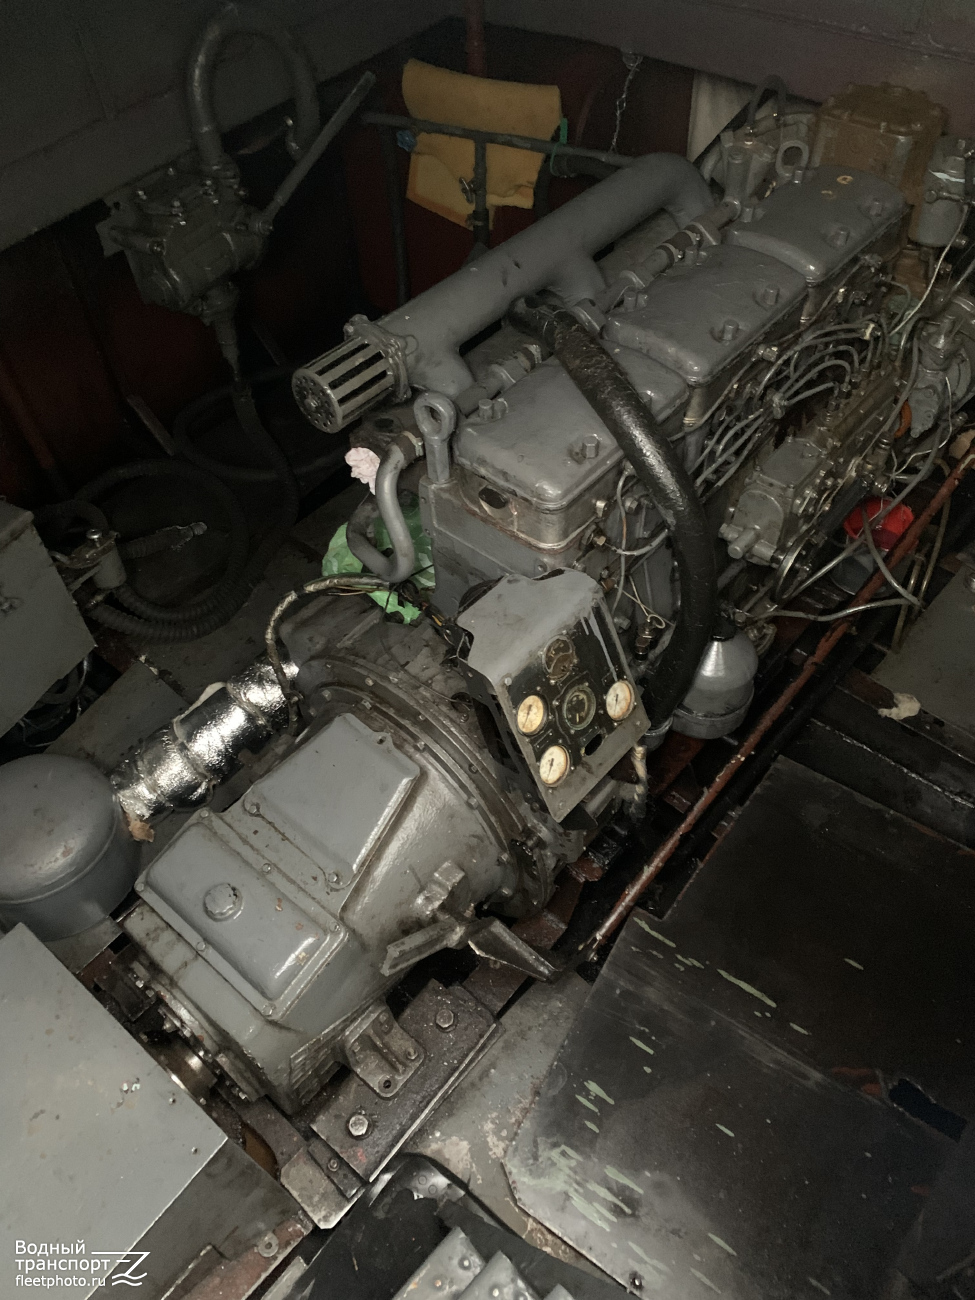 Р 53-04 ПВ. Engine Rooms